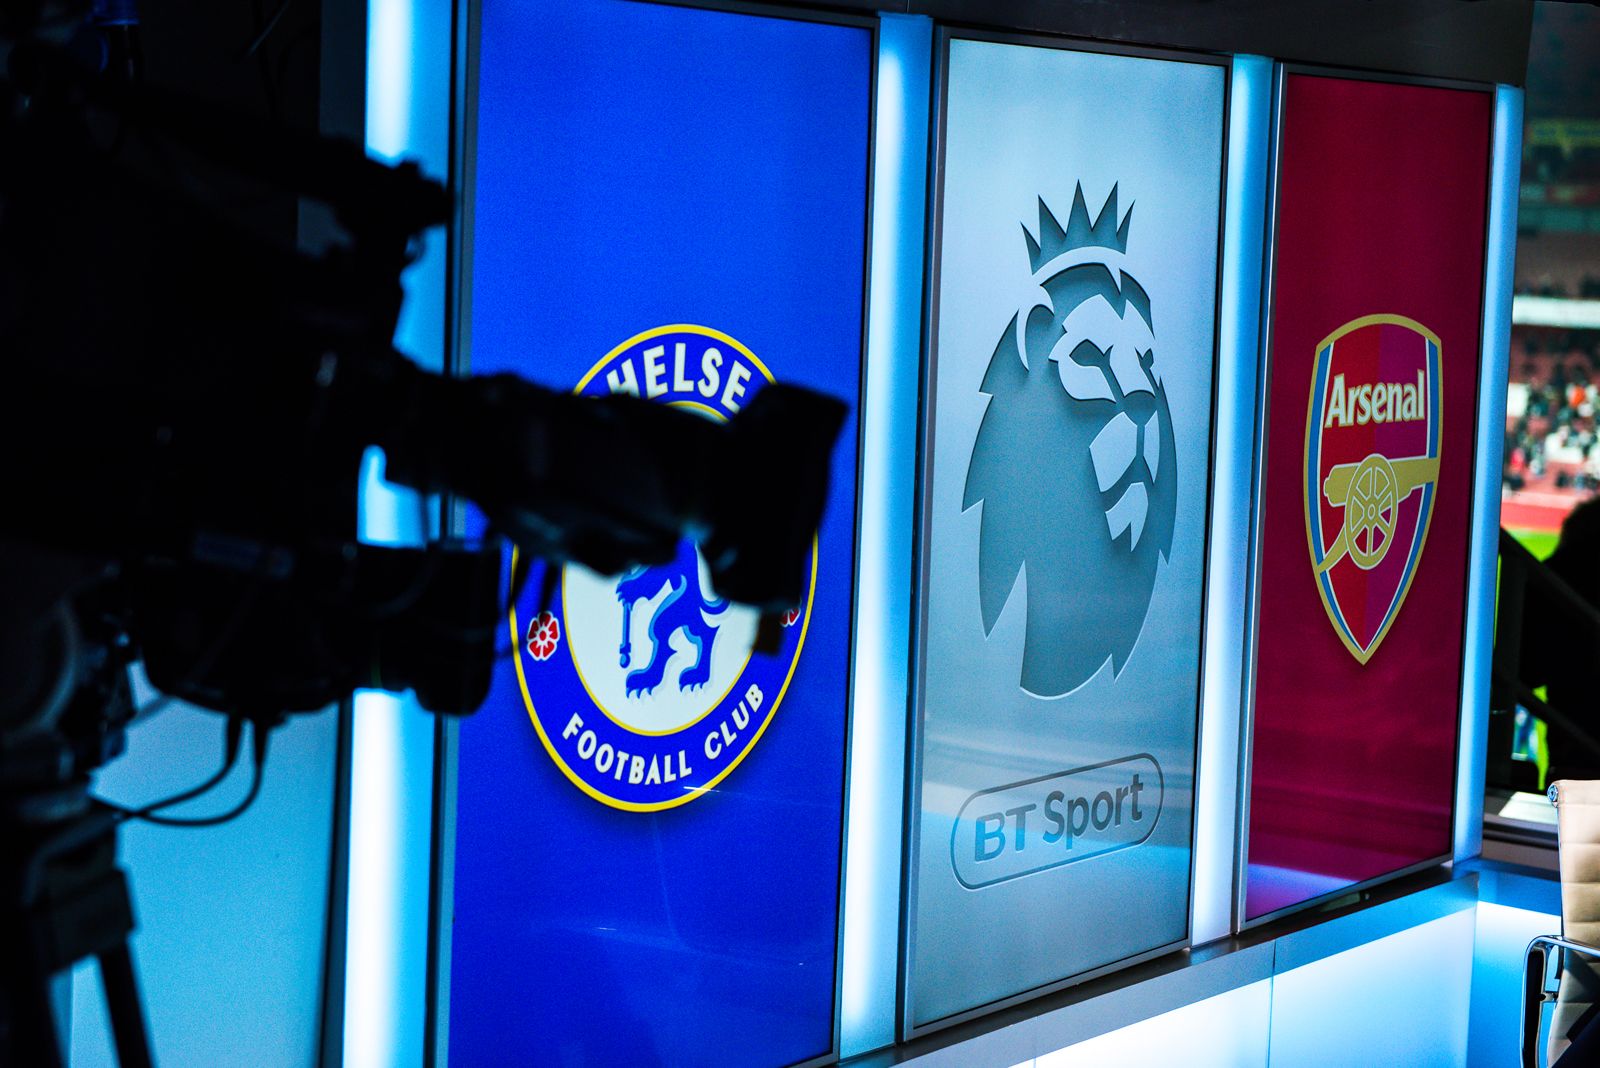 Chelsea and Arsenal logos behind BT Sport TV camera